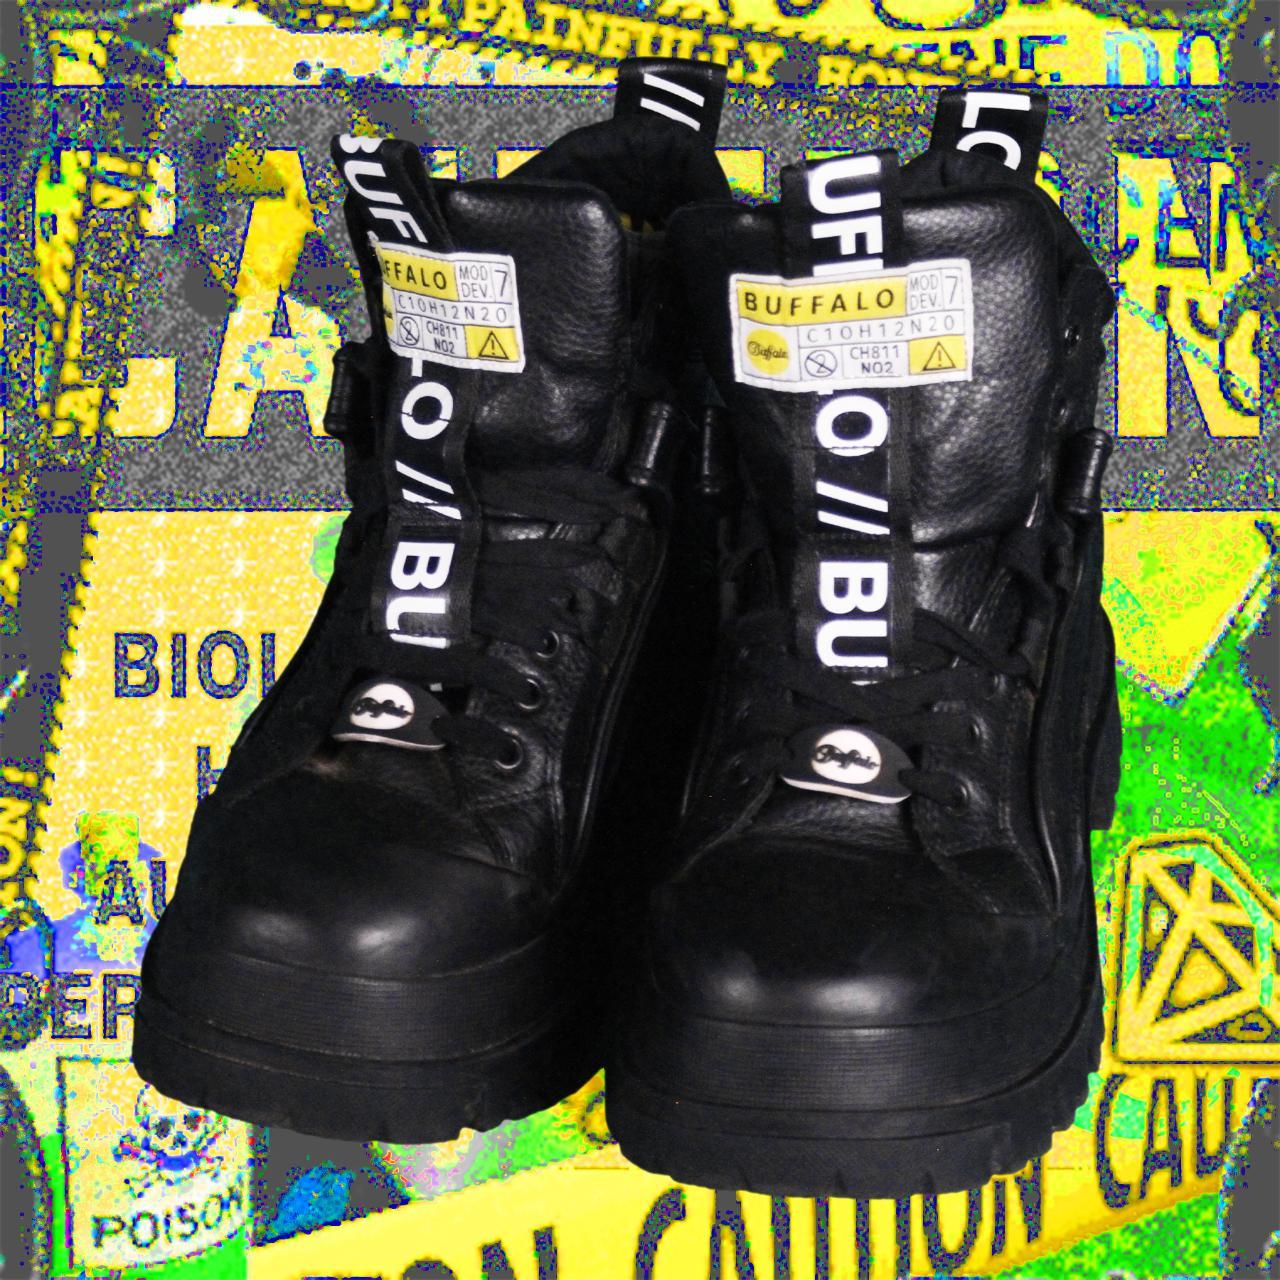 Buffalo London Women's Black and Yellow Boots (2)